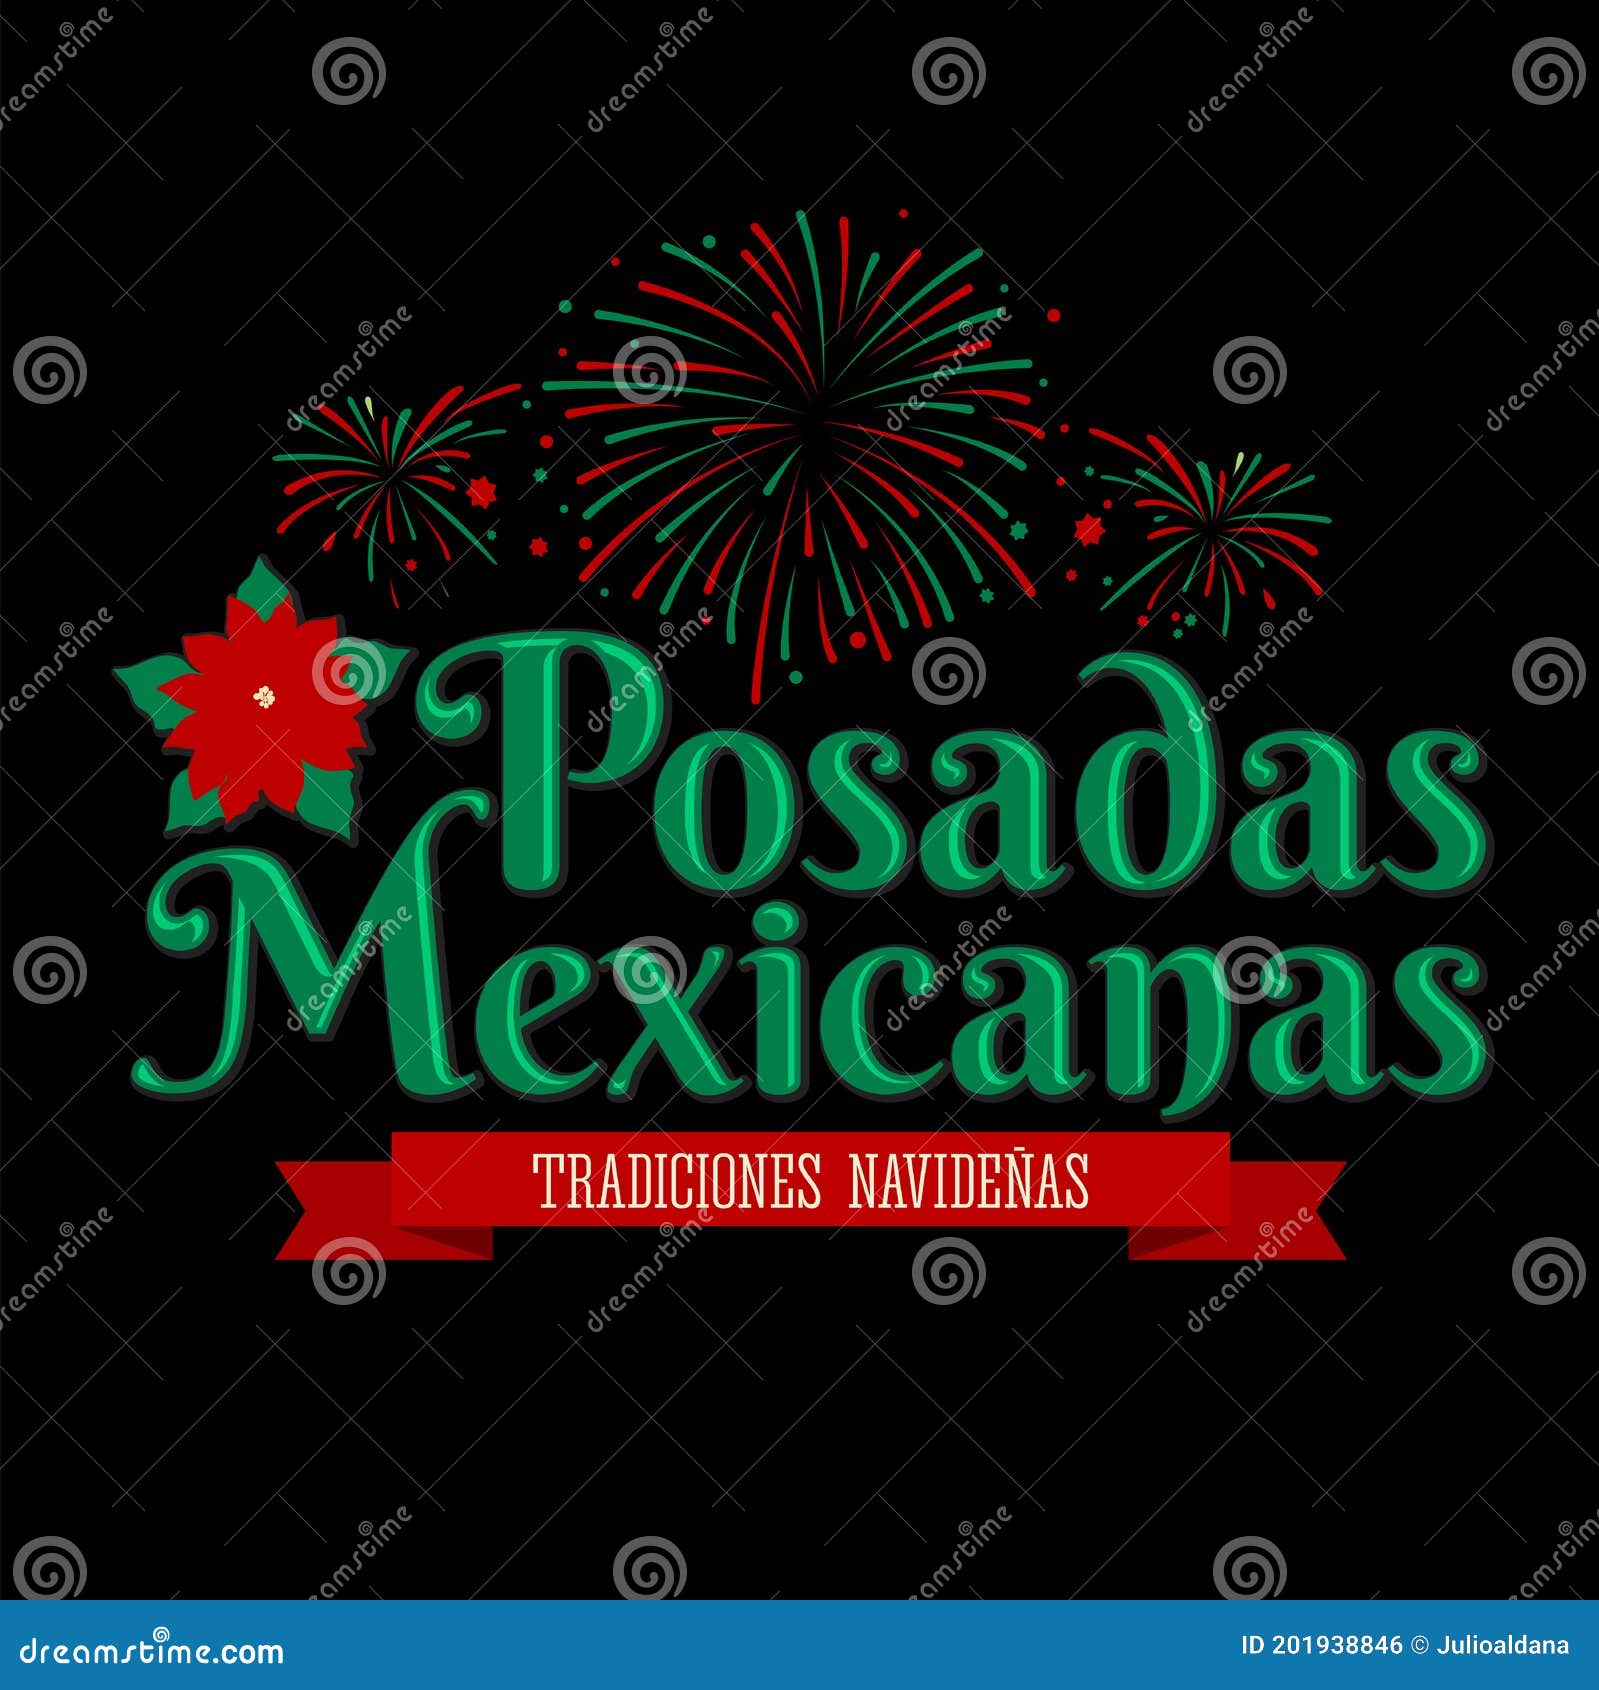 posadas mexicanas, posadas is a mexican traditional christmas fireworks celebration.